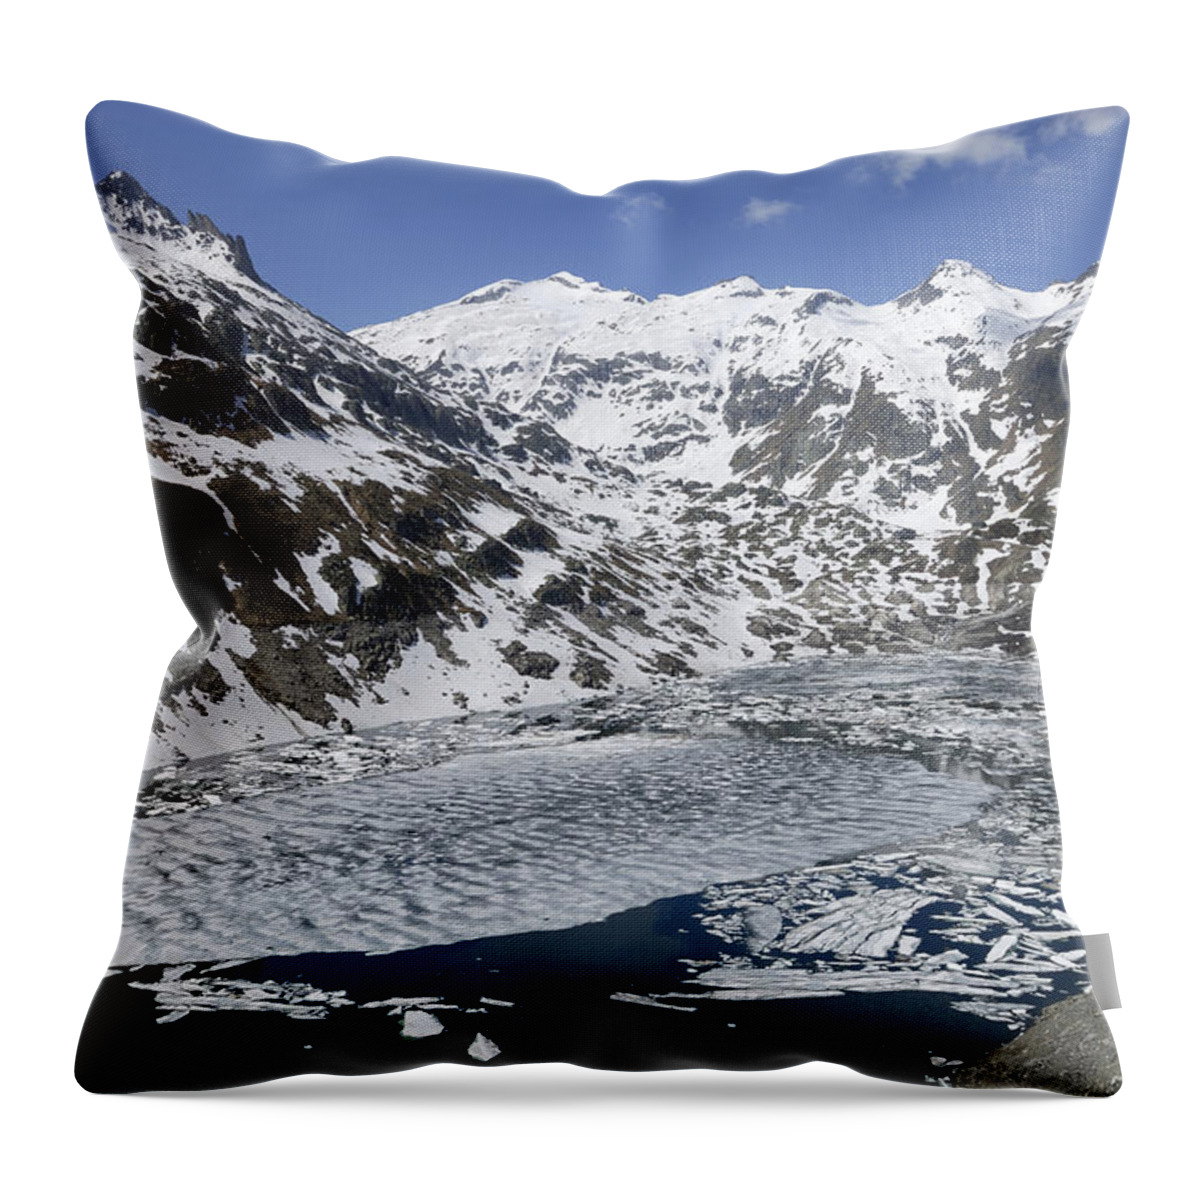 Feb0514 Throw Pillow featuring the photograph Gotthard Pass Swiss Alps by Thomas Marent